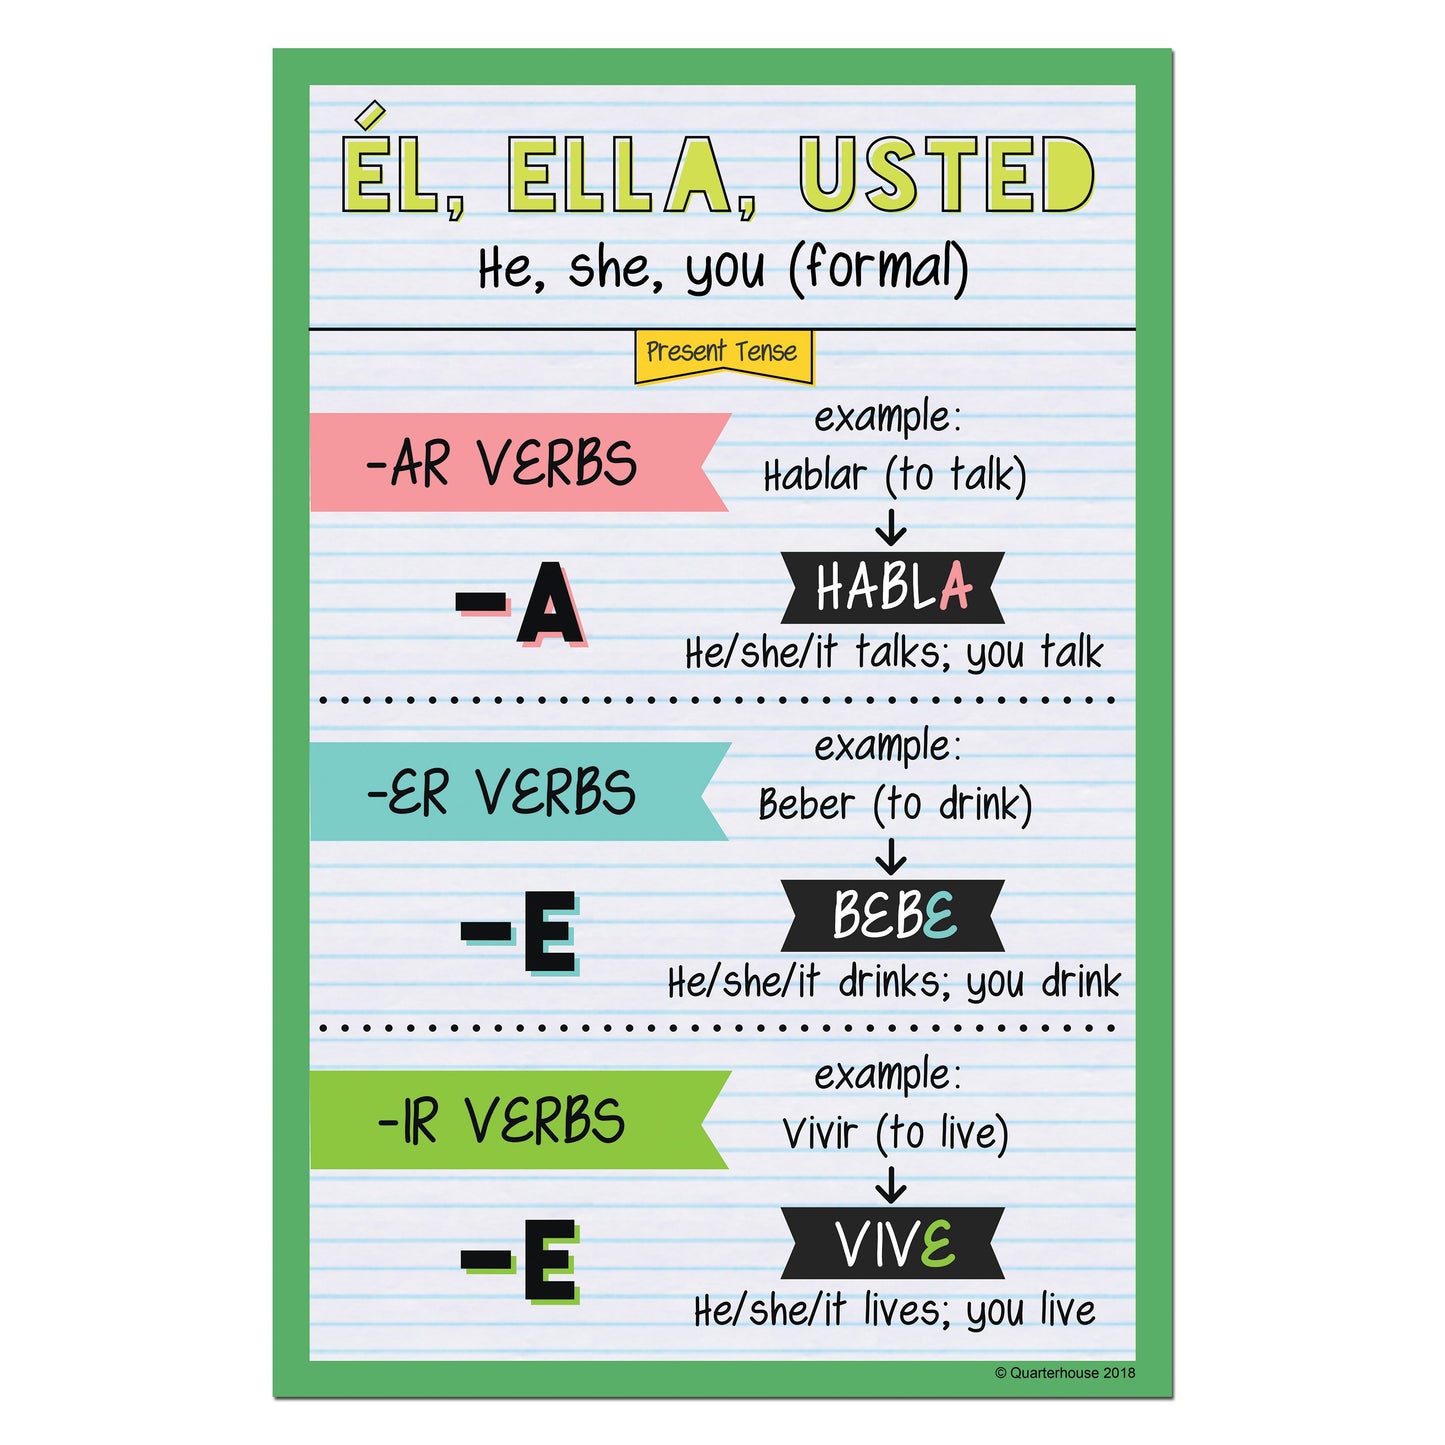 Quarterhouse Él, Ella, Usted - Present Tense Spanish Verb Conjugation Poster, Spanish and ESL Classroom Materials for Teachers